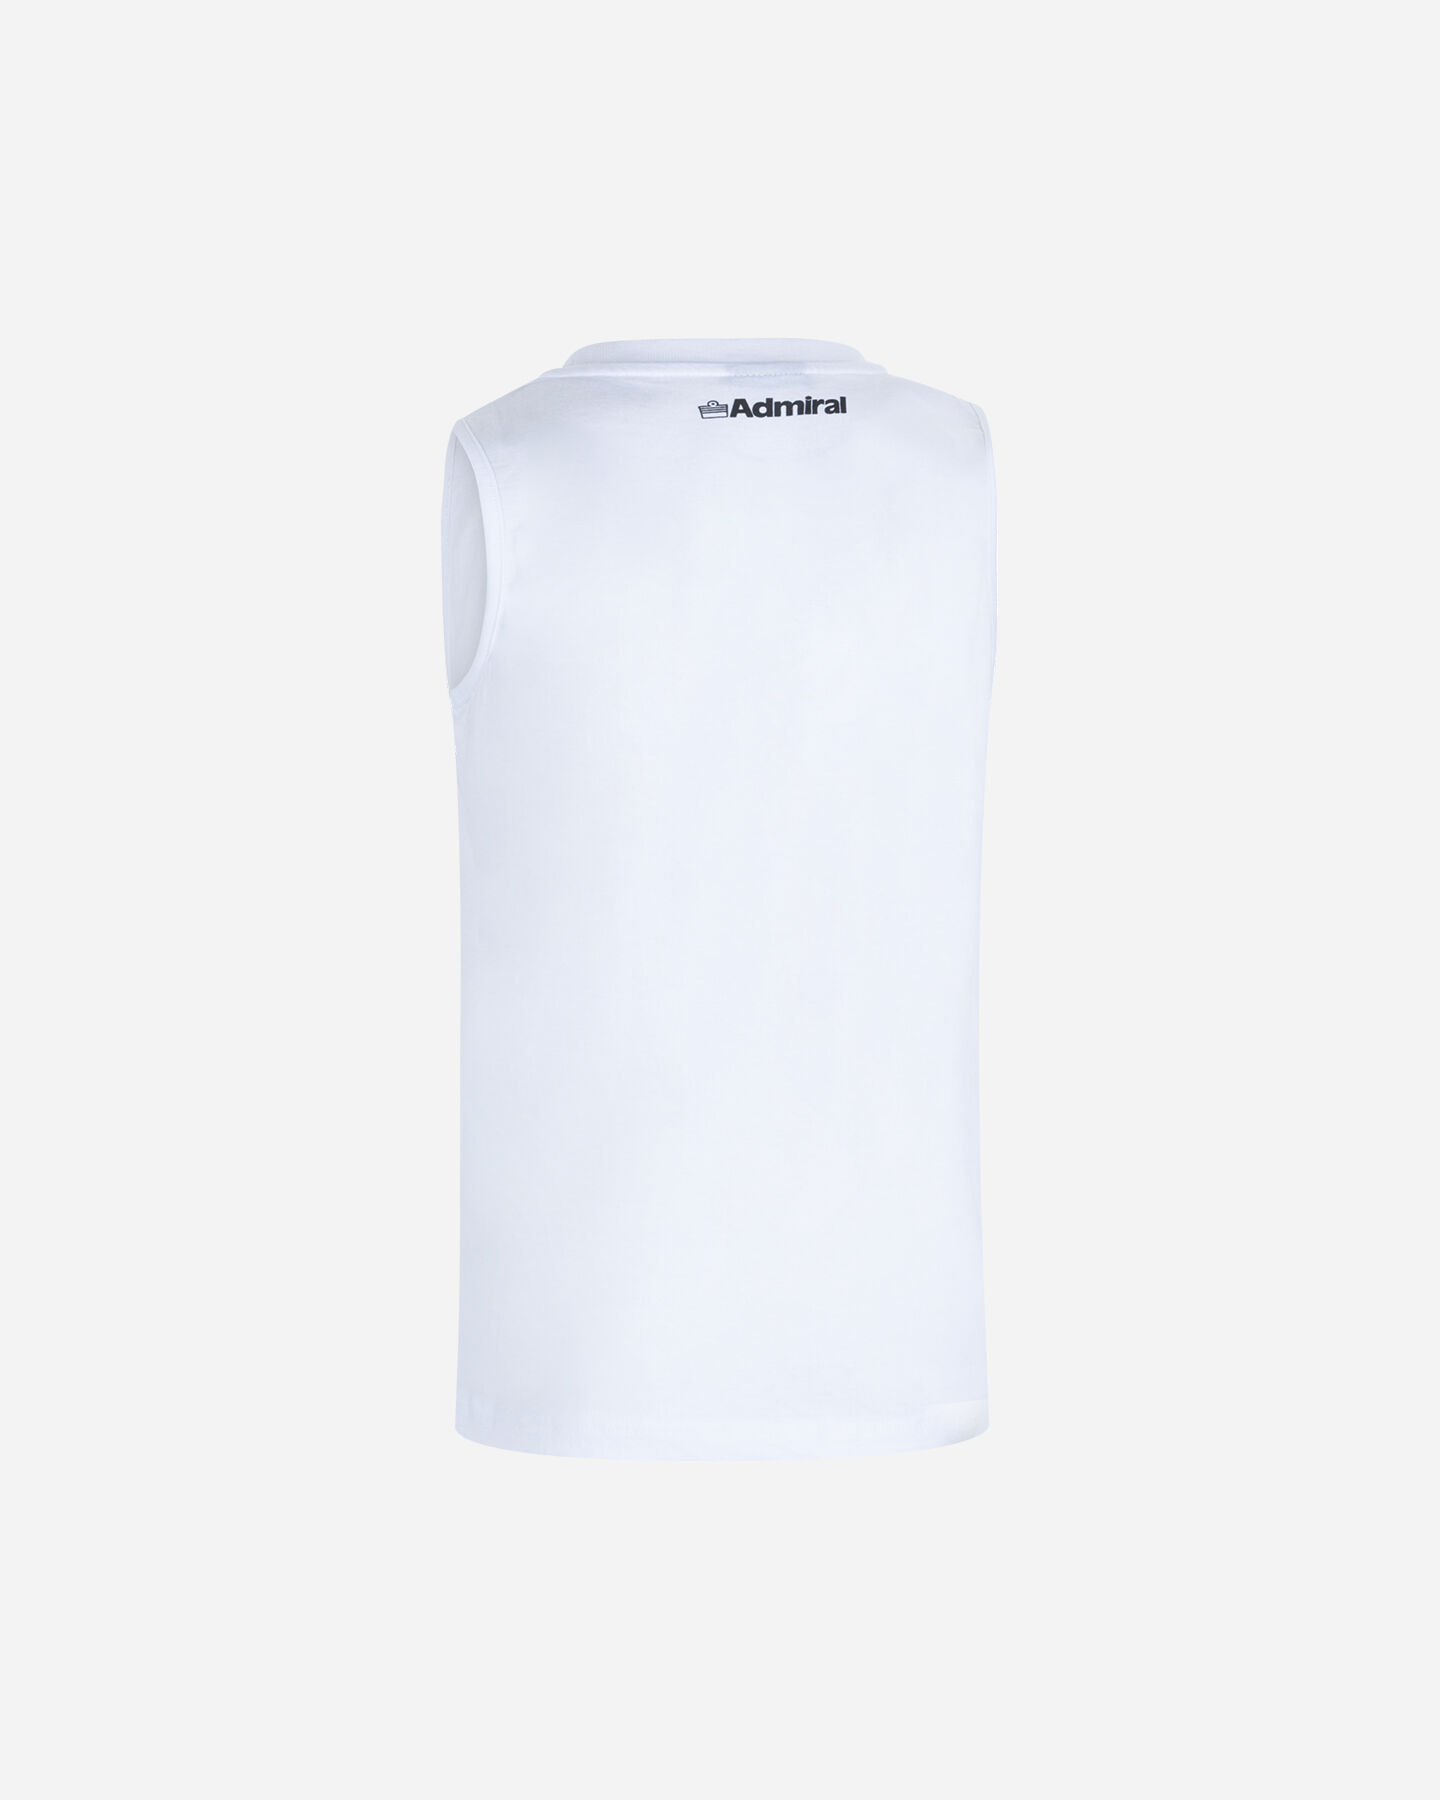  T-Shirt ADMIRAL RAINBOW LOGO JR S4121682|001|8A scatto 1